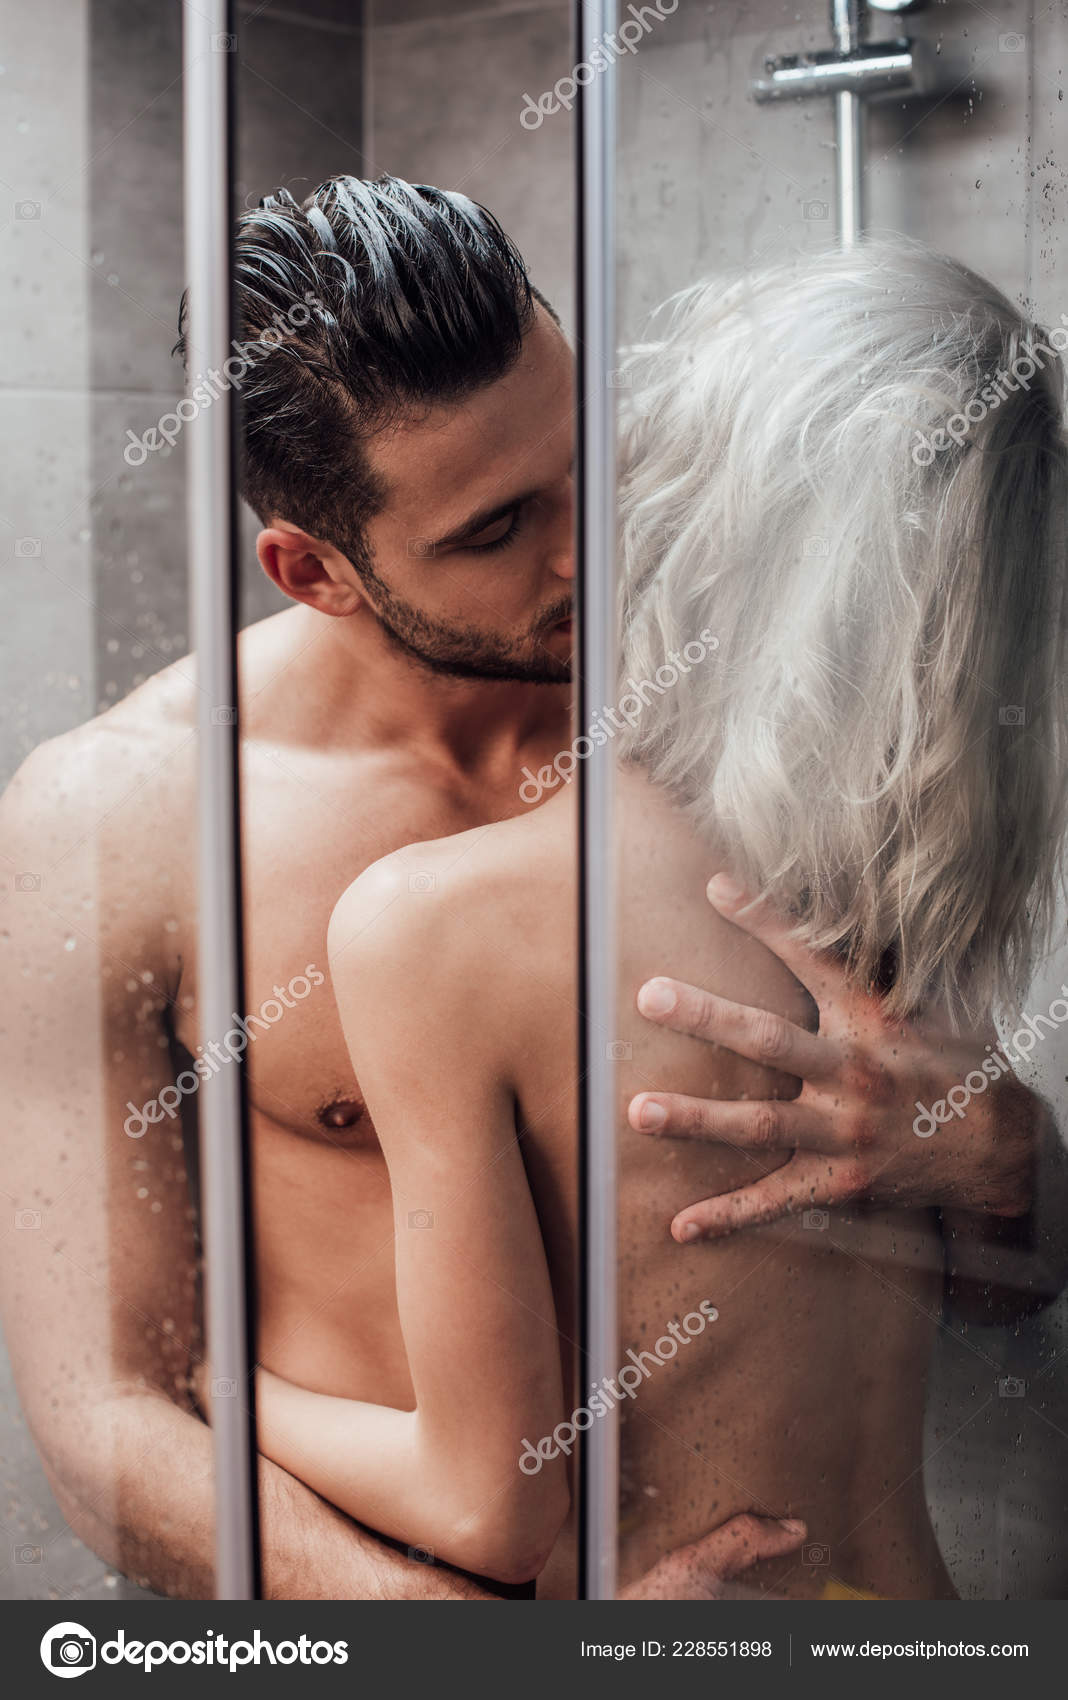 alvaro lopez garcia add naked couple in shower photo